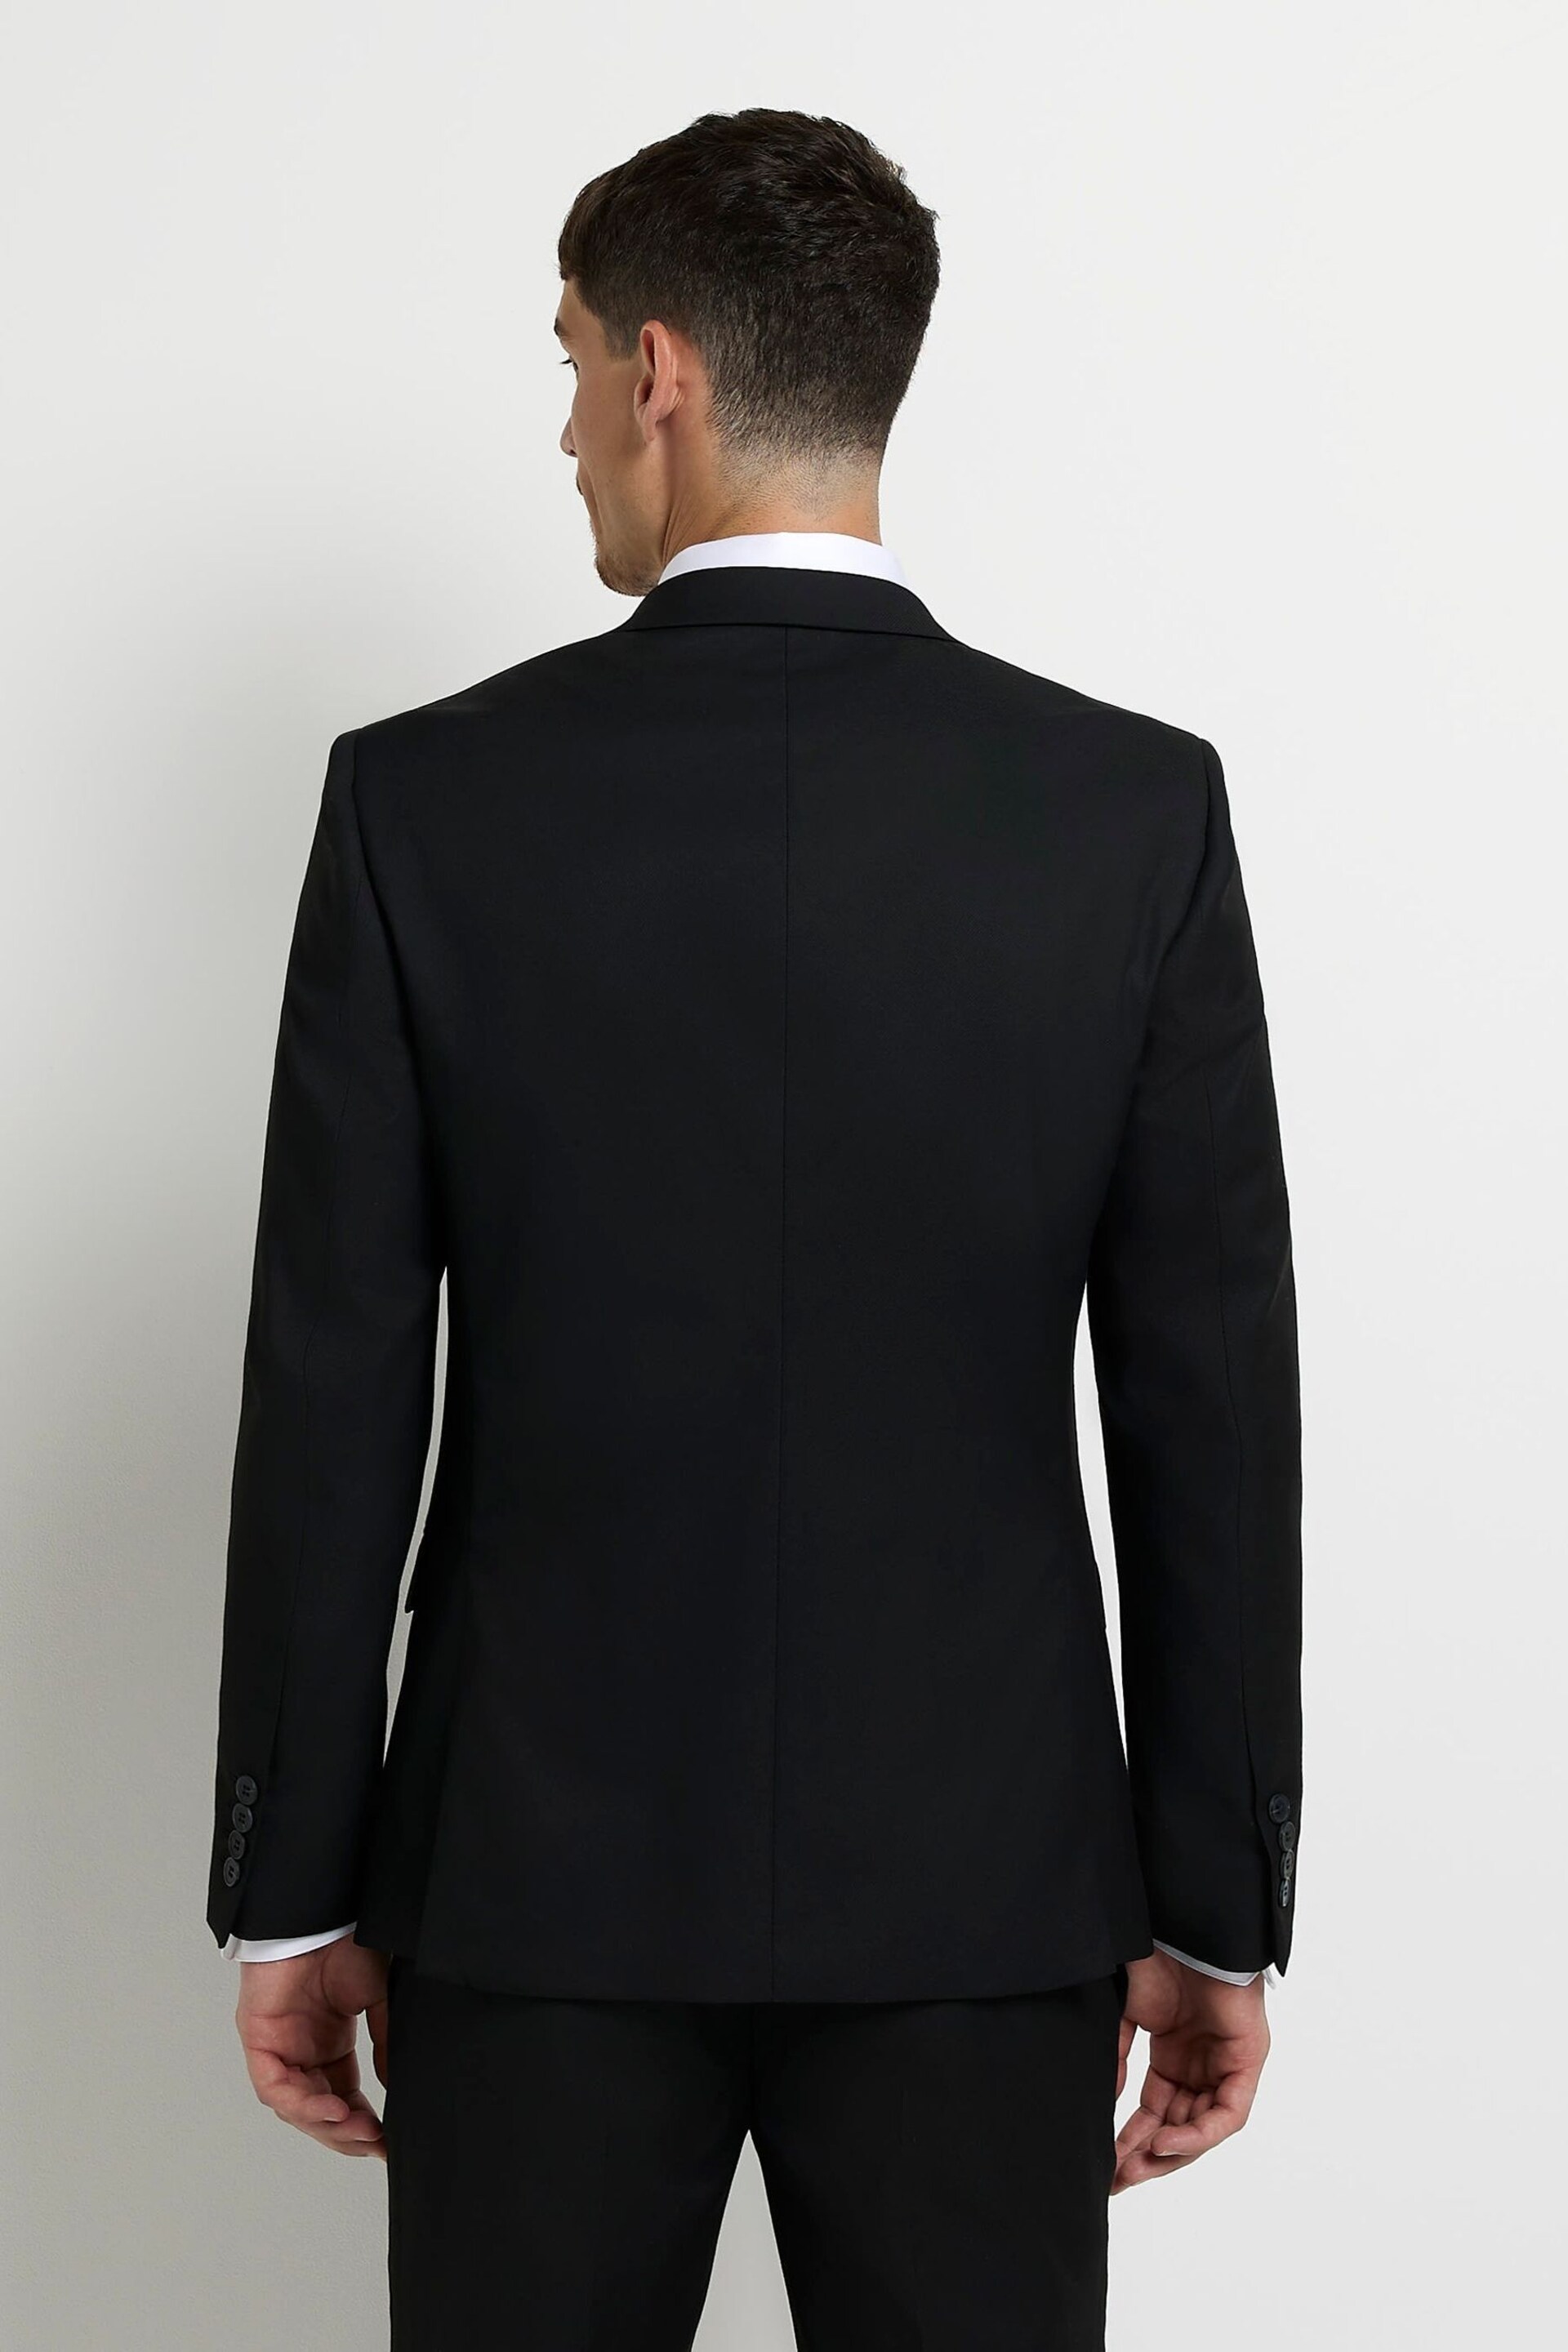 River Island Black Skinny Twill Suit: Jacket - Image 3 of 4